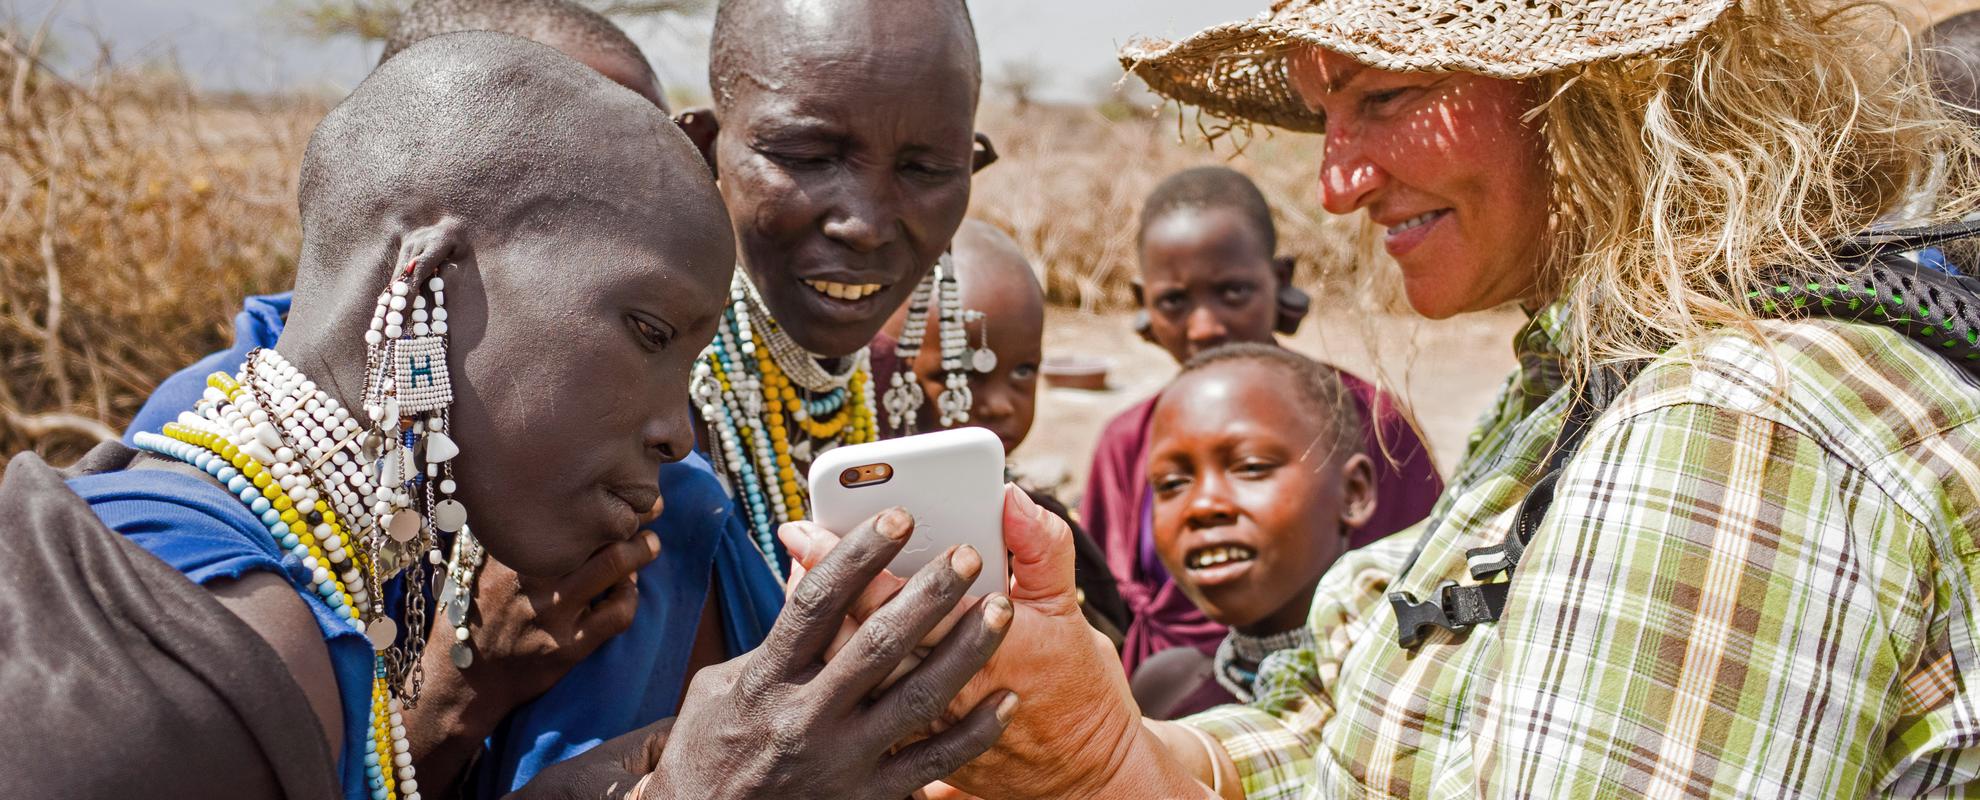 Mobilsamvaro i norra Tanzania